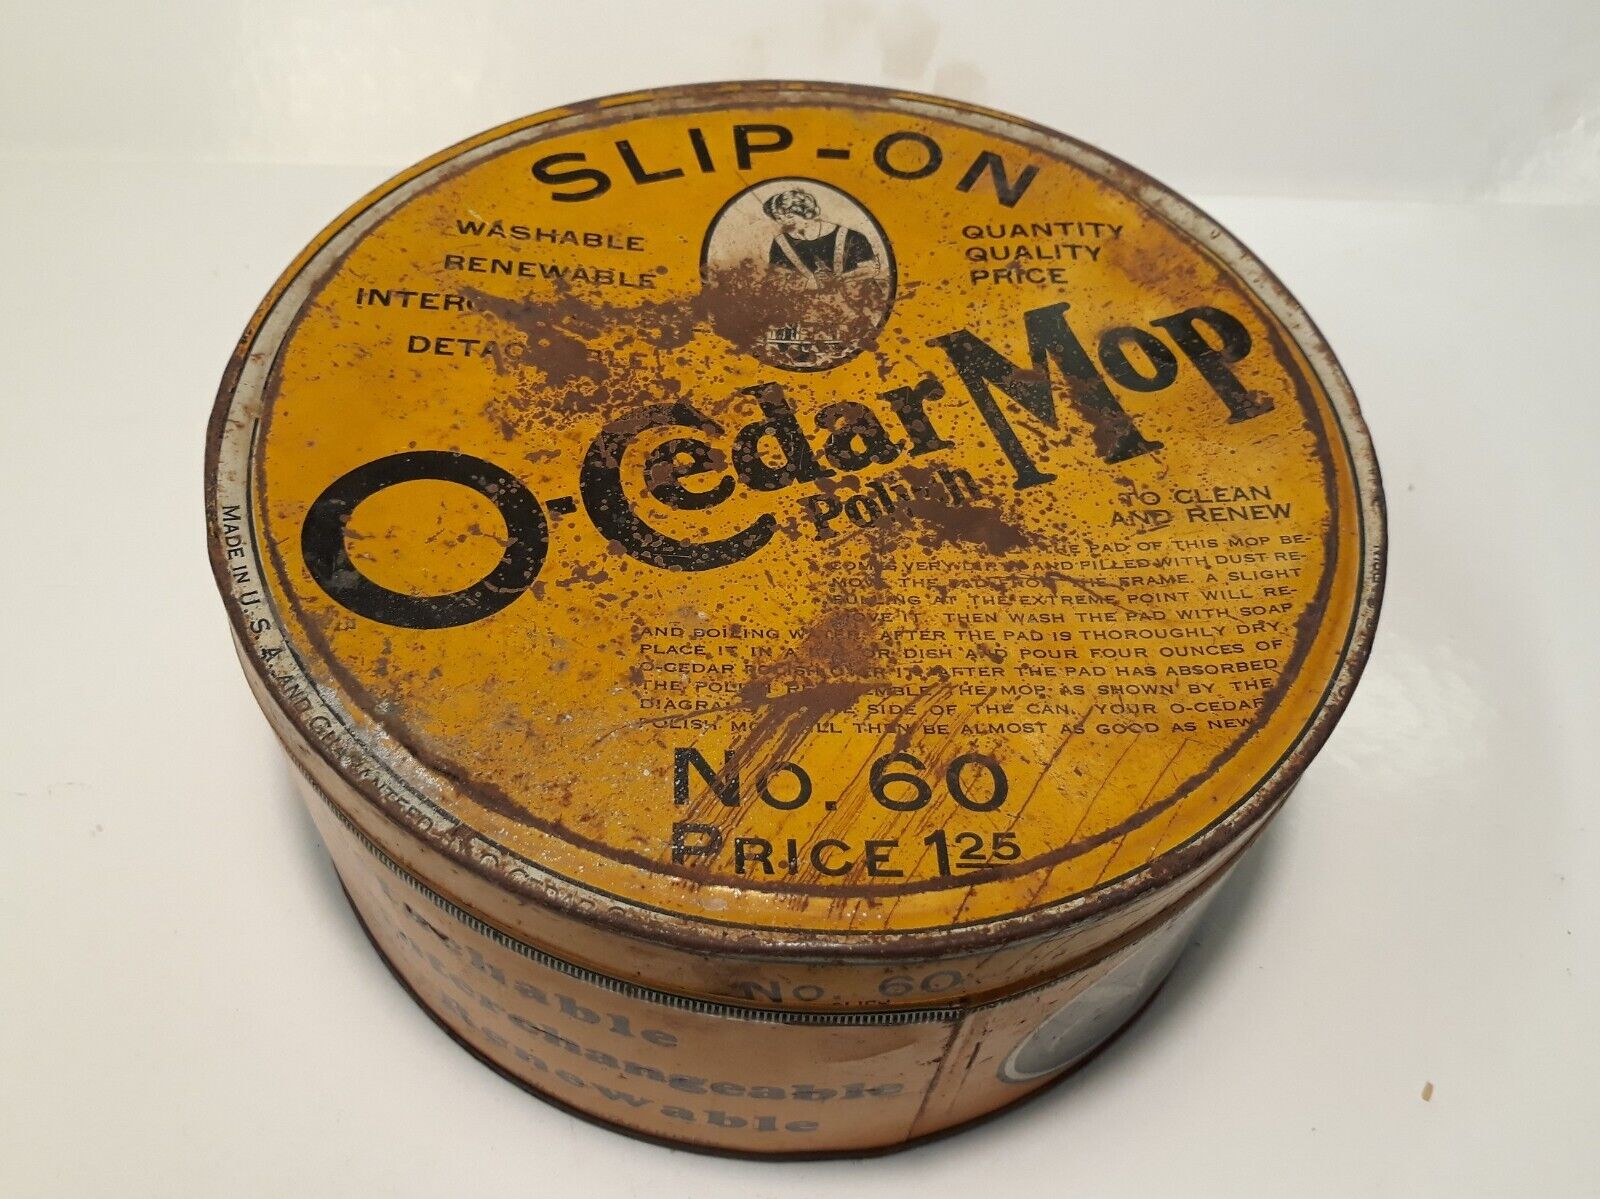 Vintage O-Cedar Mop Advertising Tin Canister 1929 No 60 8 inches